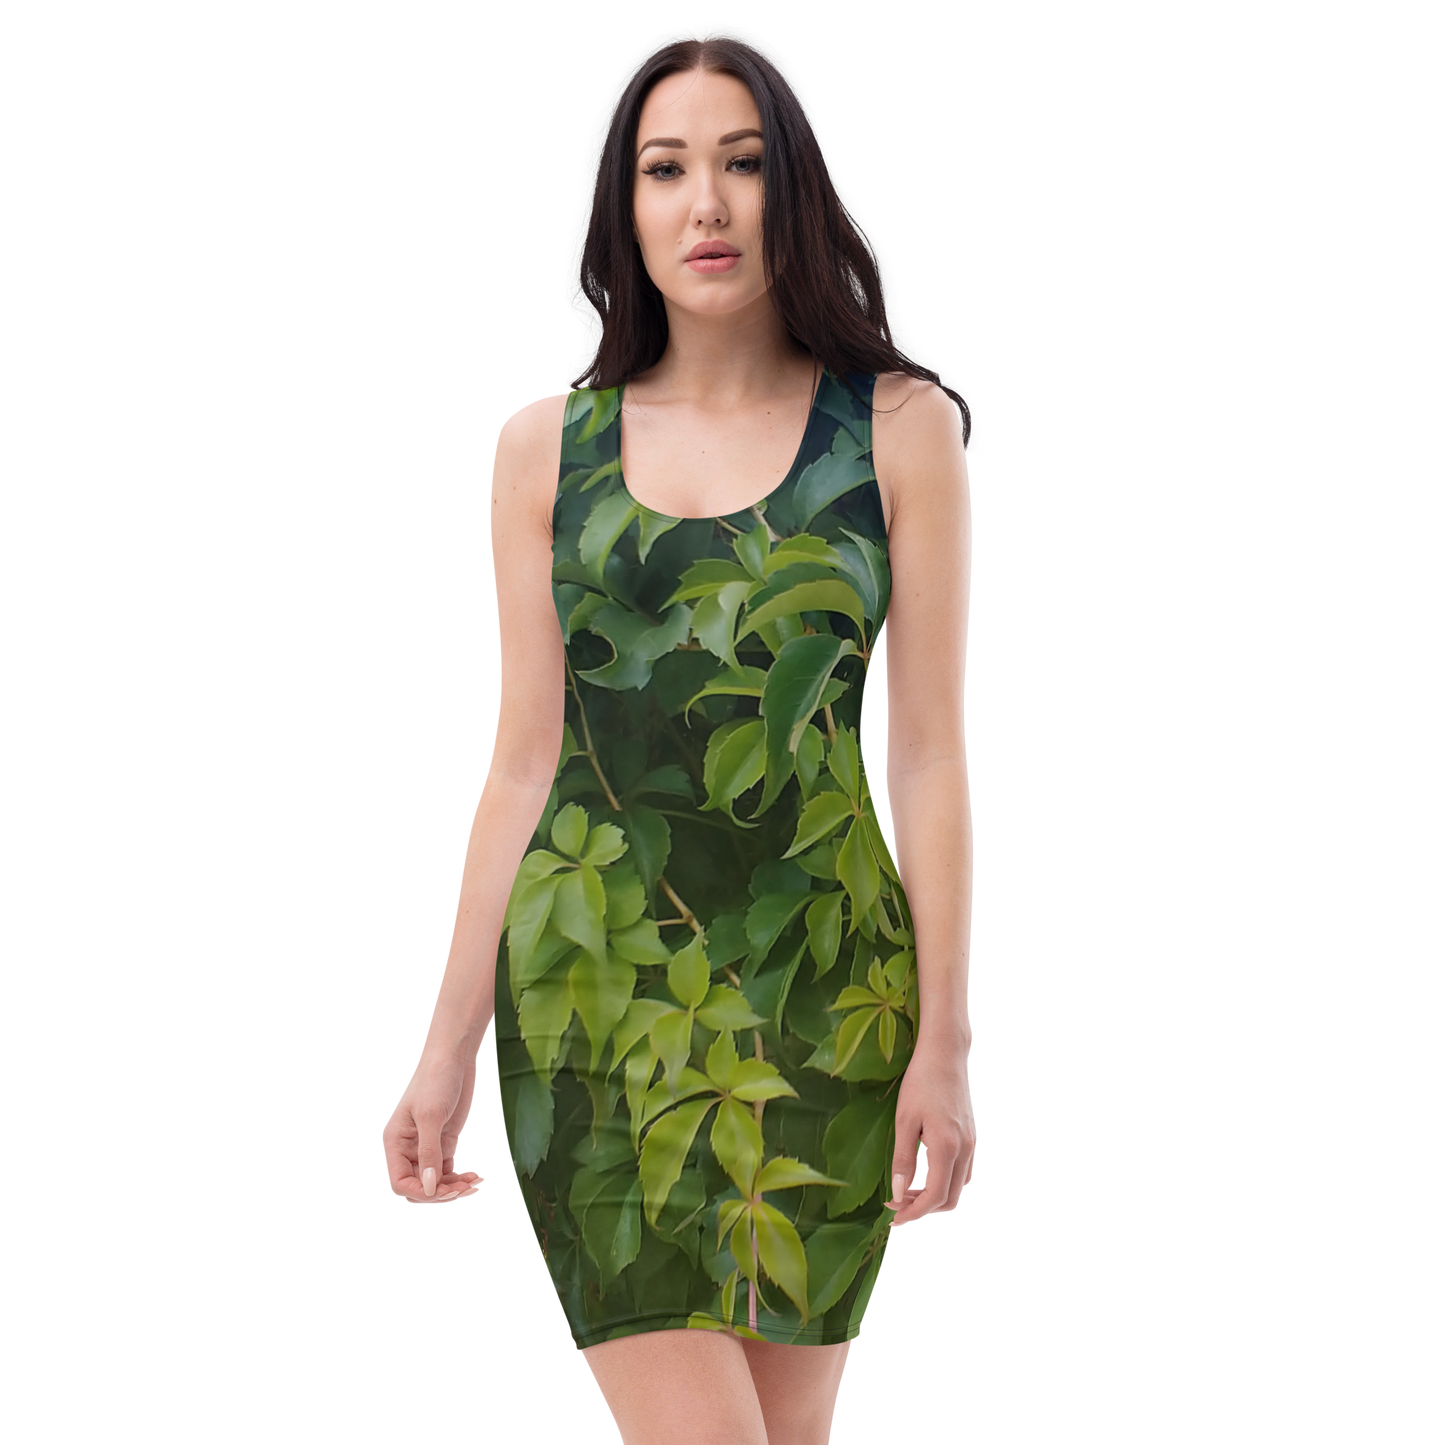 The EARTH LOVE Collection - "Valiant Virginia Creeper" Design Tank Dress